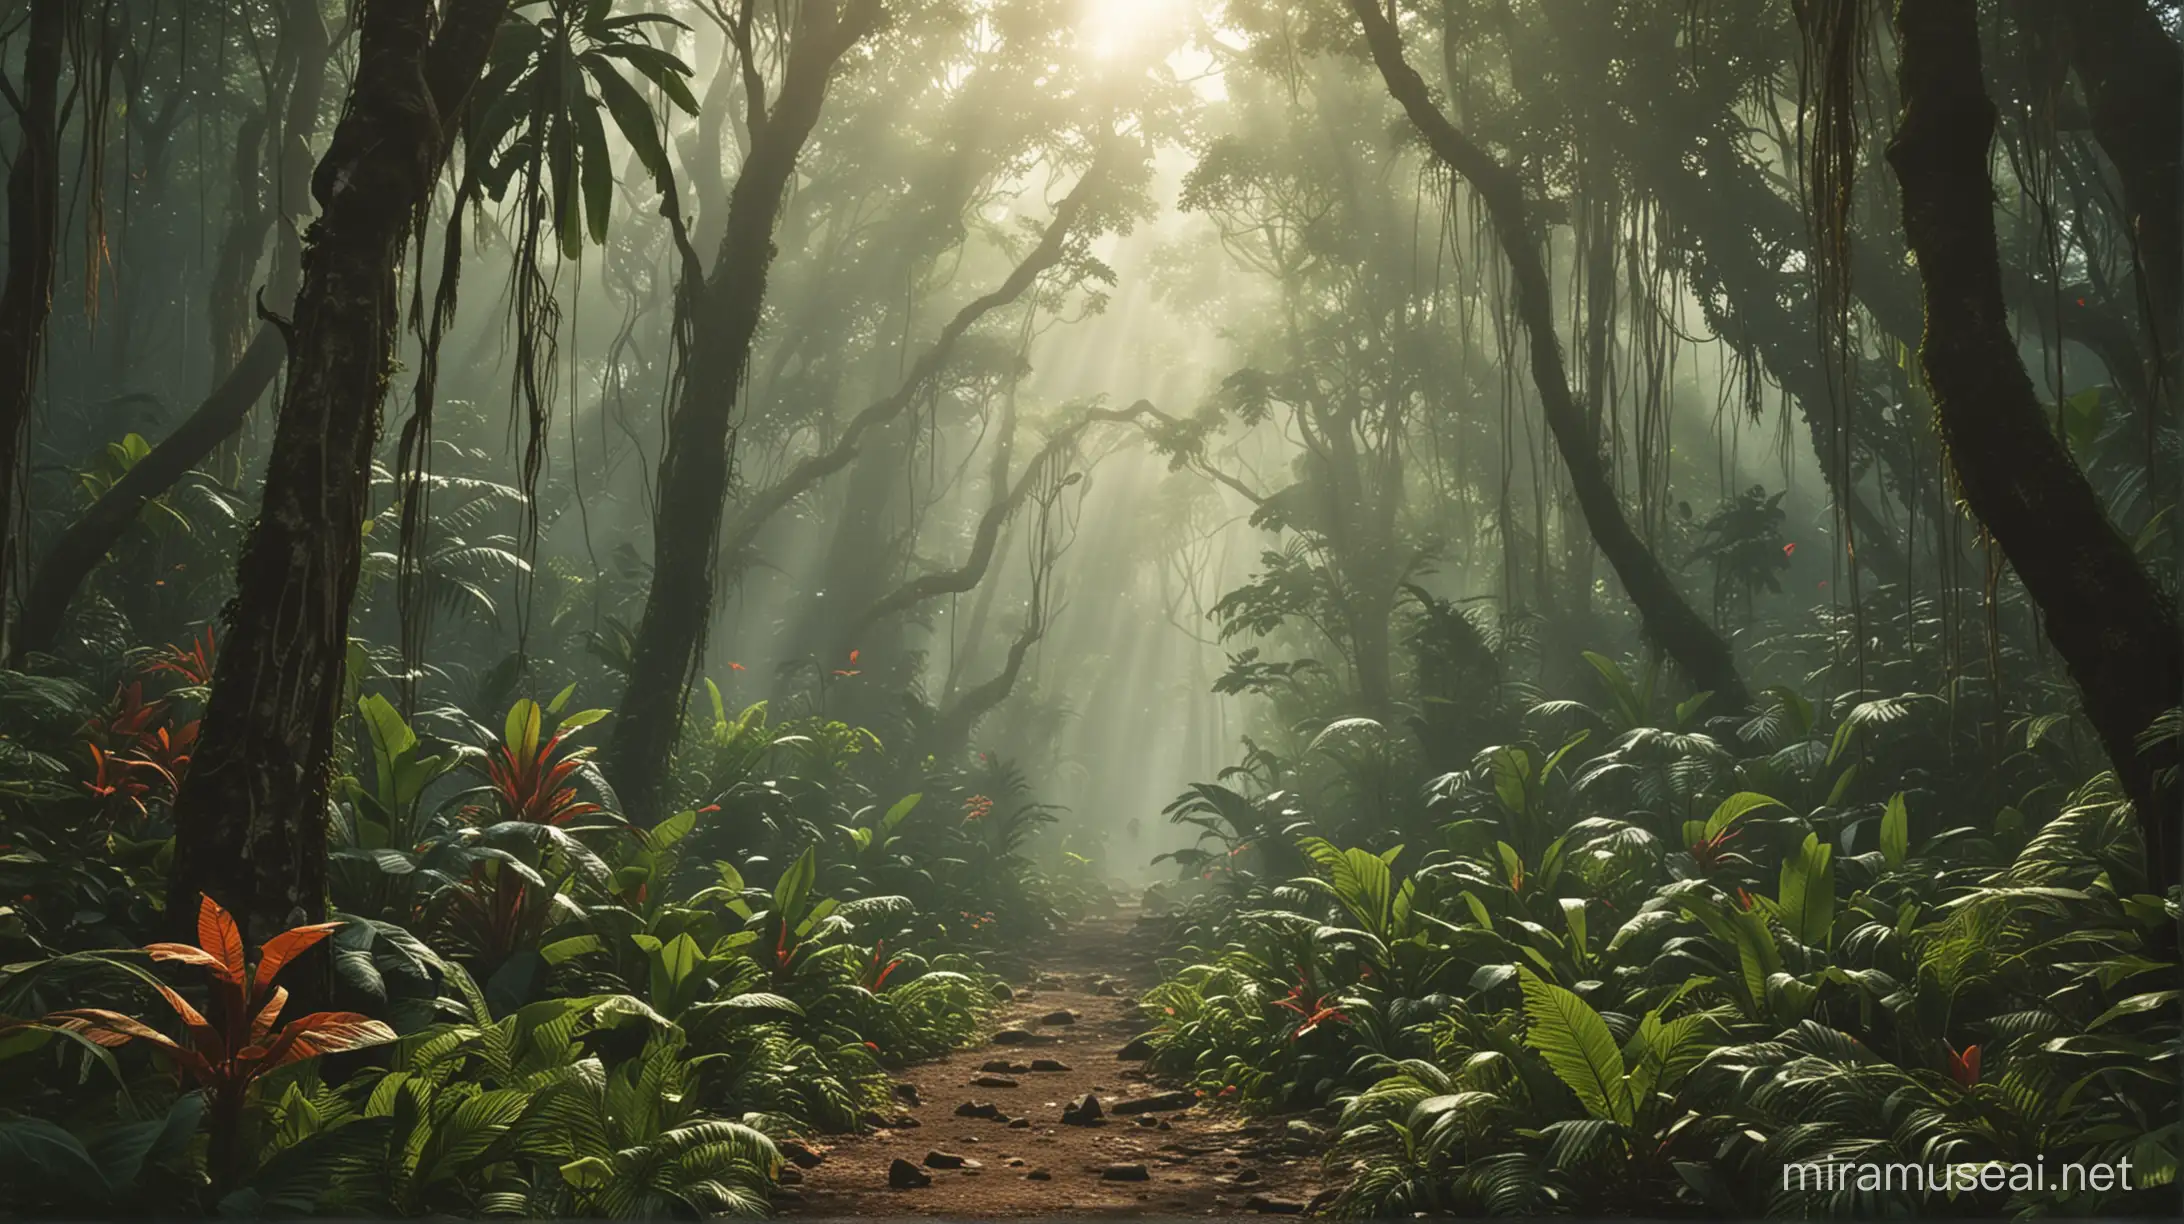 Vibrant Jungle Scene Teeming with Life